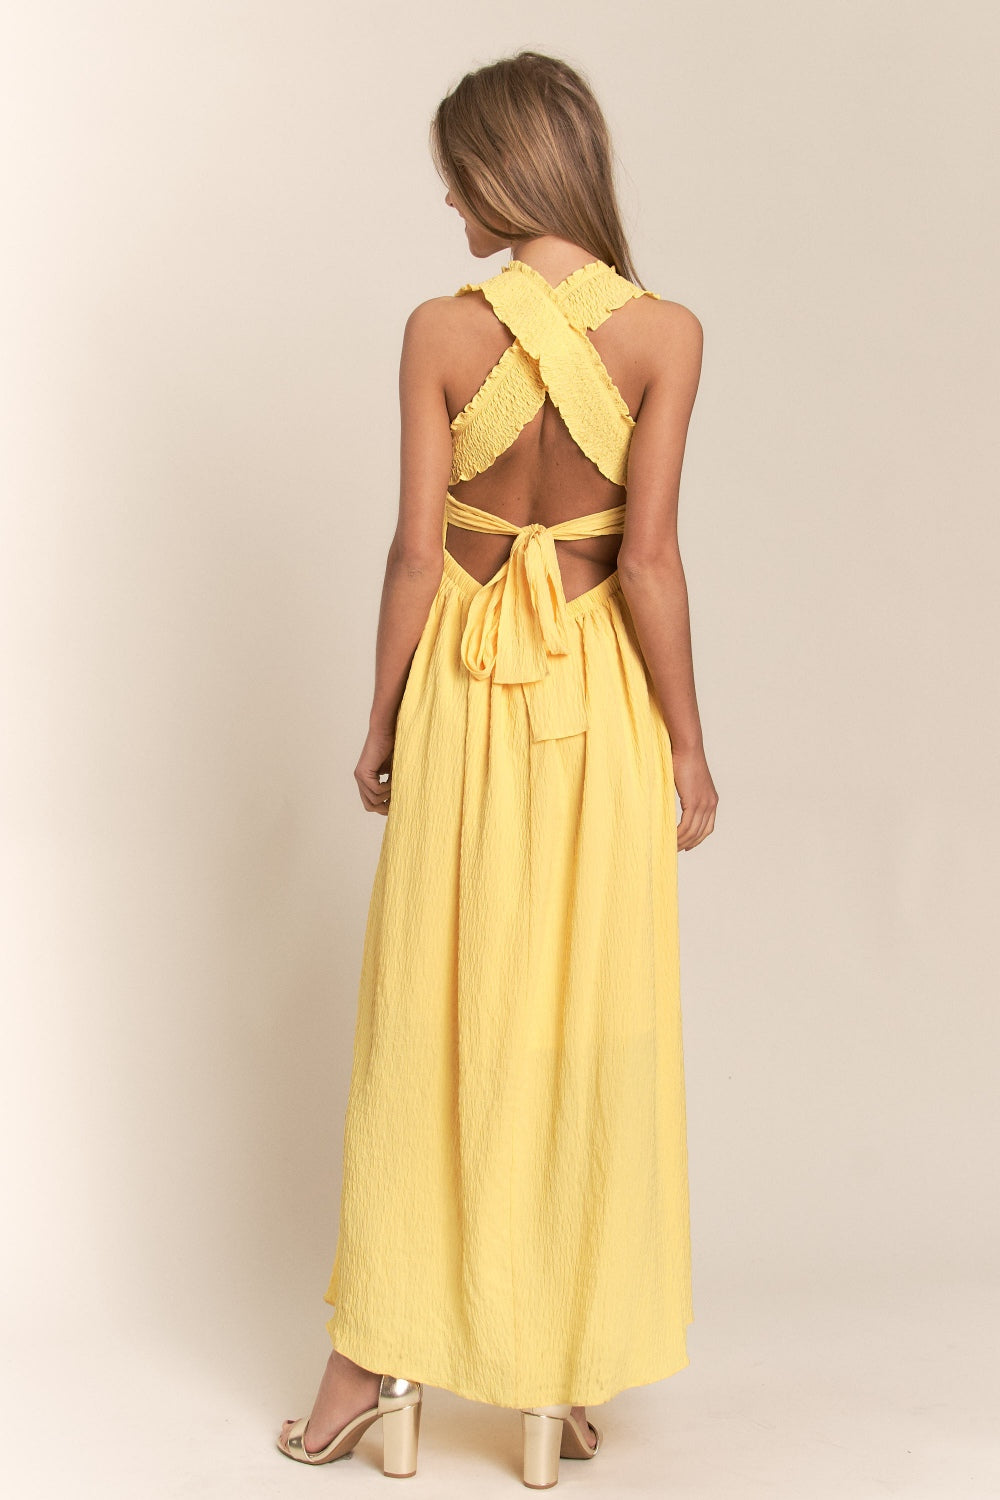 TEEK - Banana Texture Crisscross Back Tie Smocked Maxi Dress DRESS TEEK Trend   